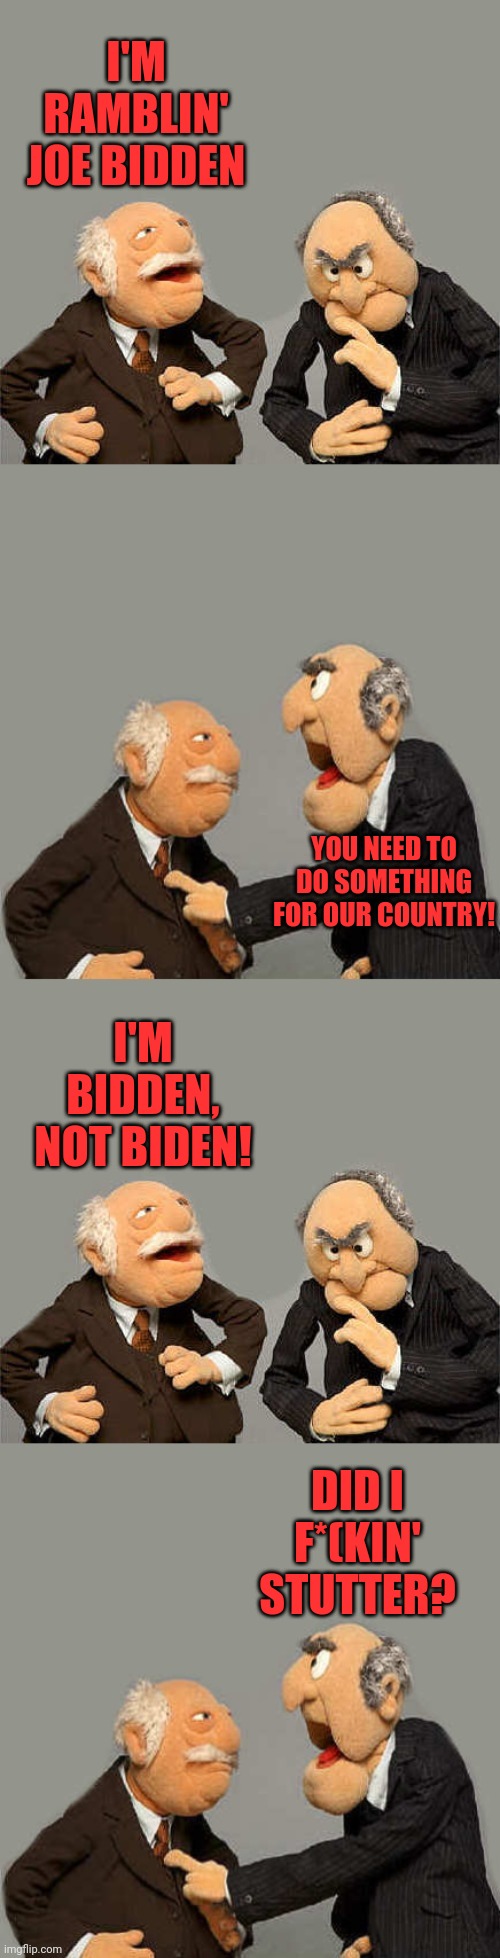 Bidden | I'M RAMBLIN' JOE BIDDEN; YOU NEED TO DO SOMETHING FOR OUR COUNTRY! I'M BIDDEN, NOT BIDEN! DID I F*(KIN' STUTTER? | image tagged in the meme with no name,joe biden,muppets | made w/ Imgflip meme maker